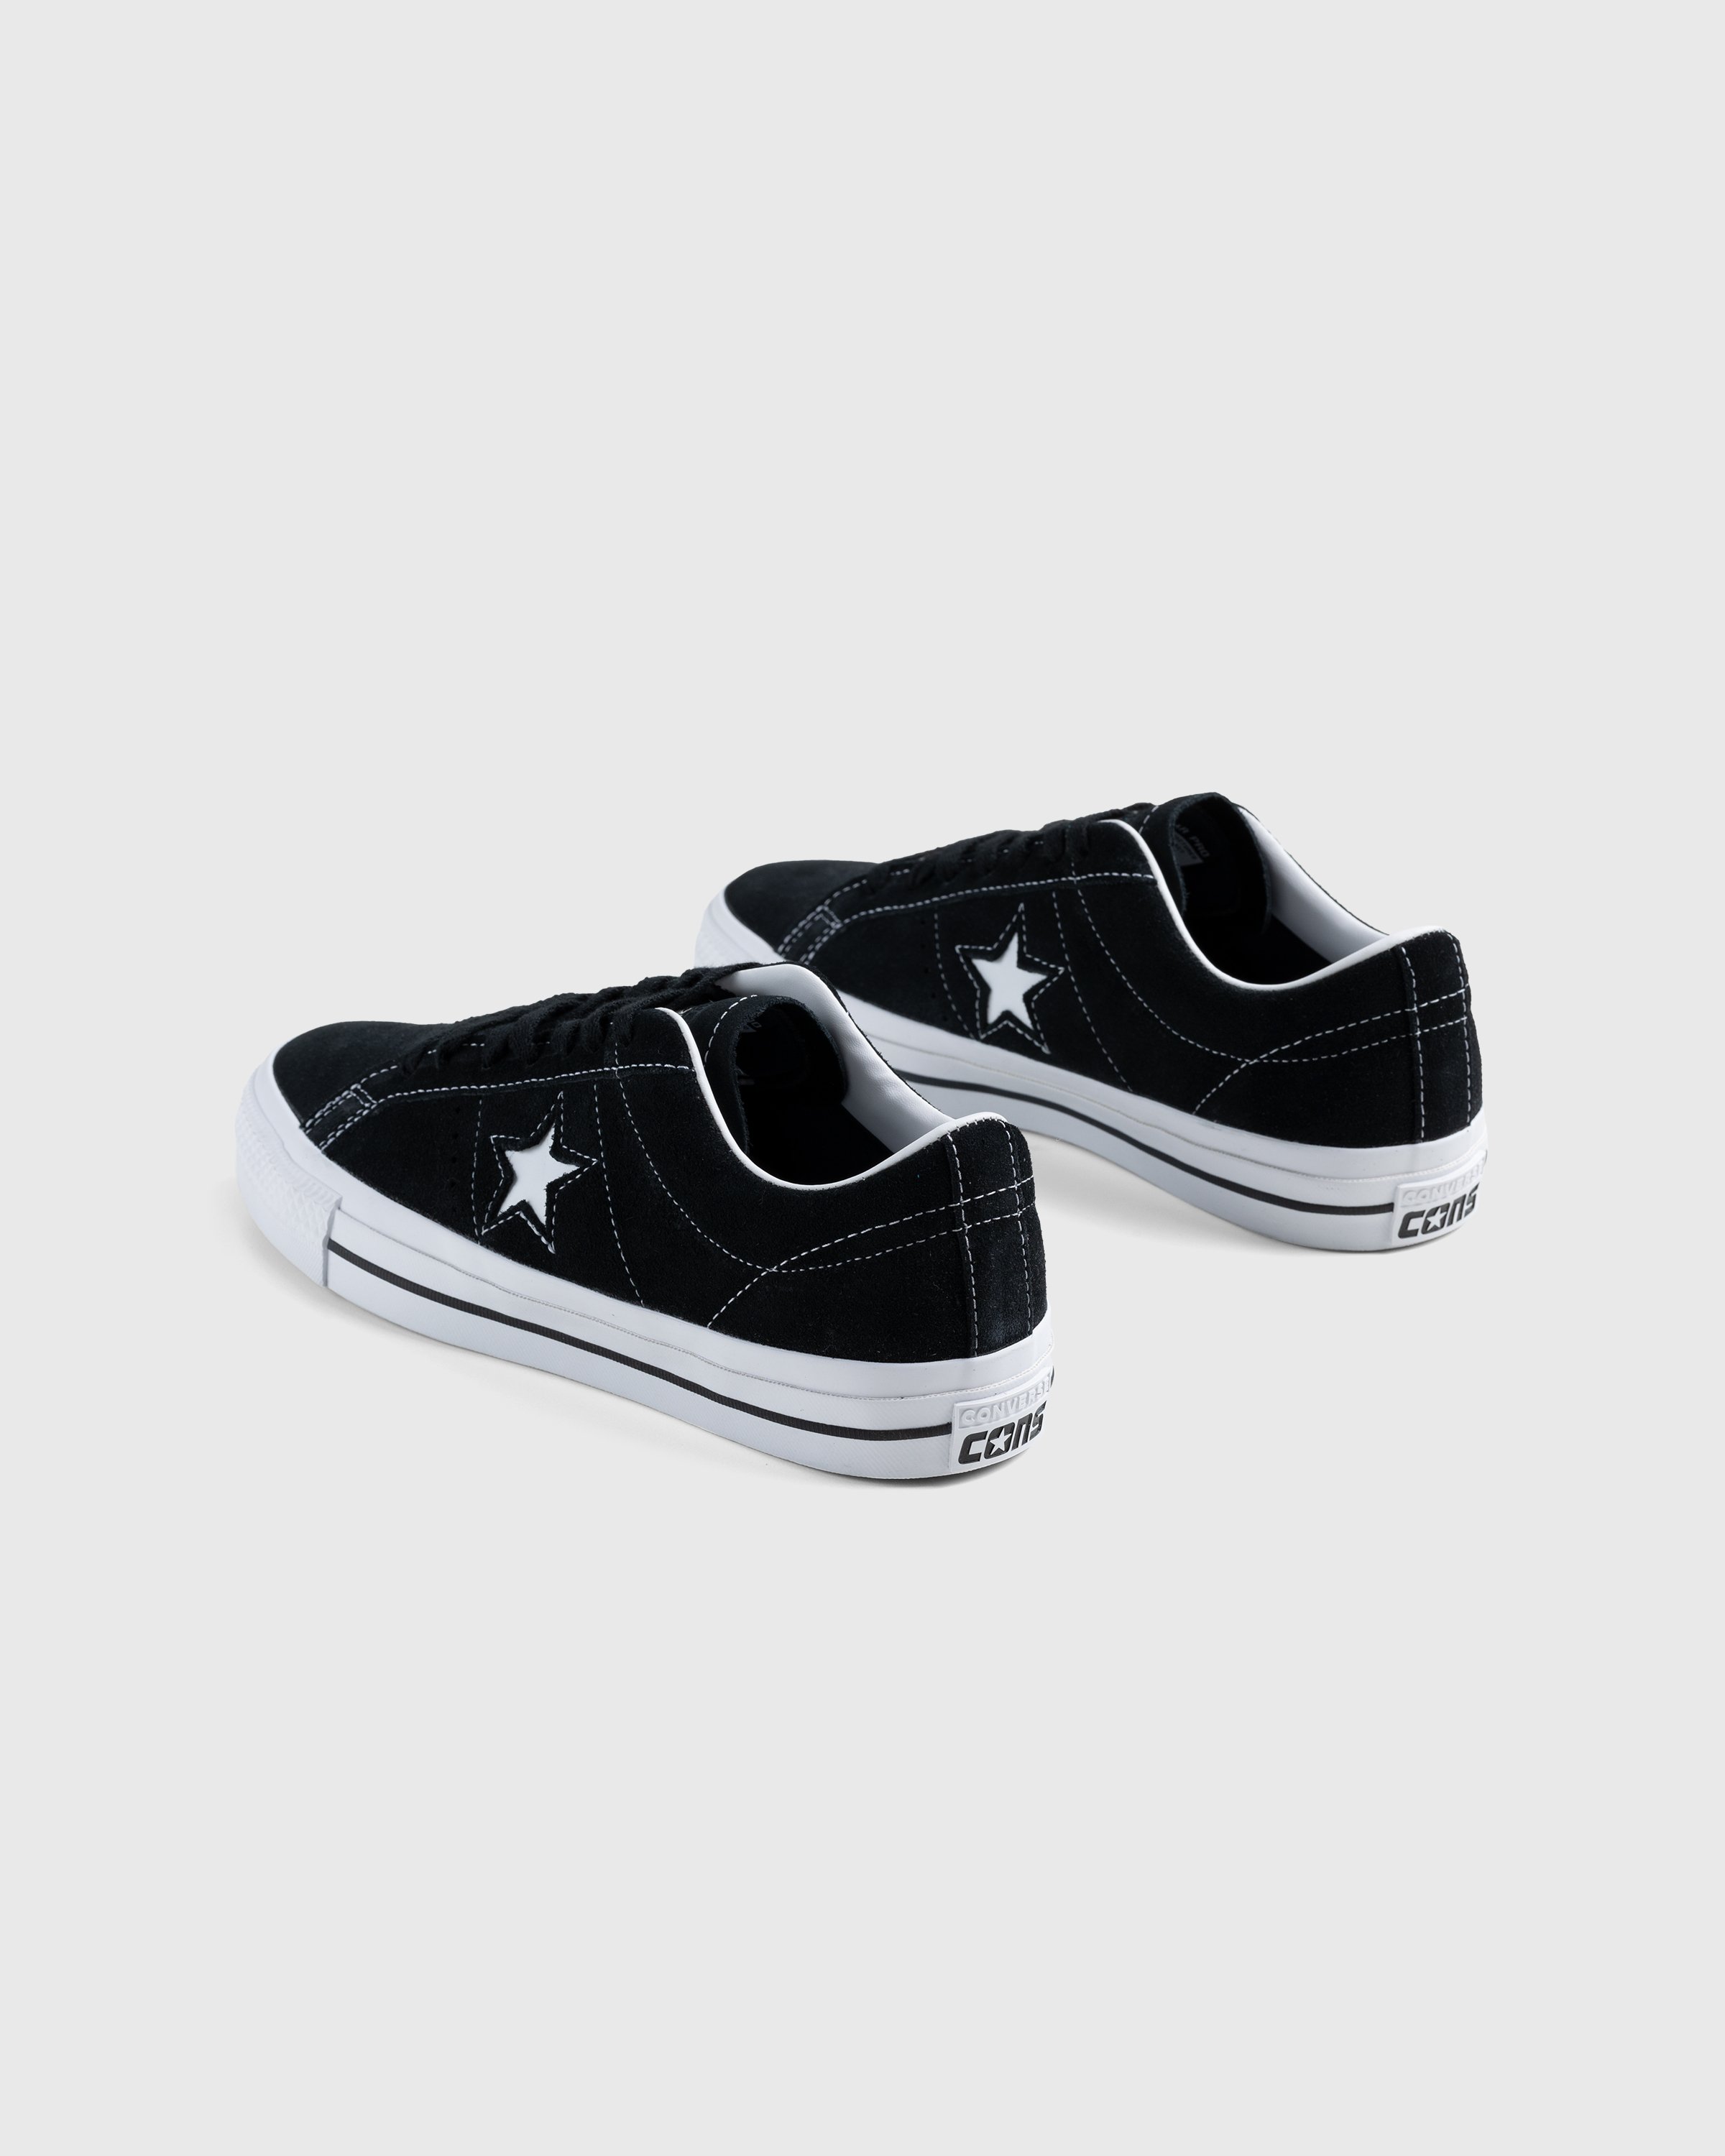 Converse - One Star Pro Black/White - Footwear - Black - Image 4